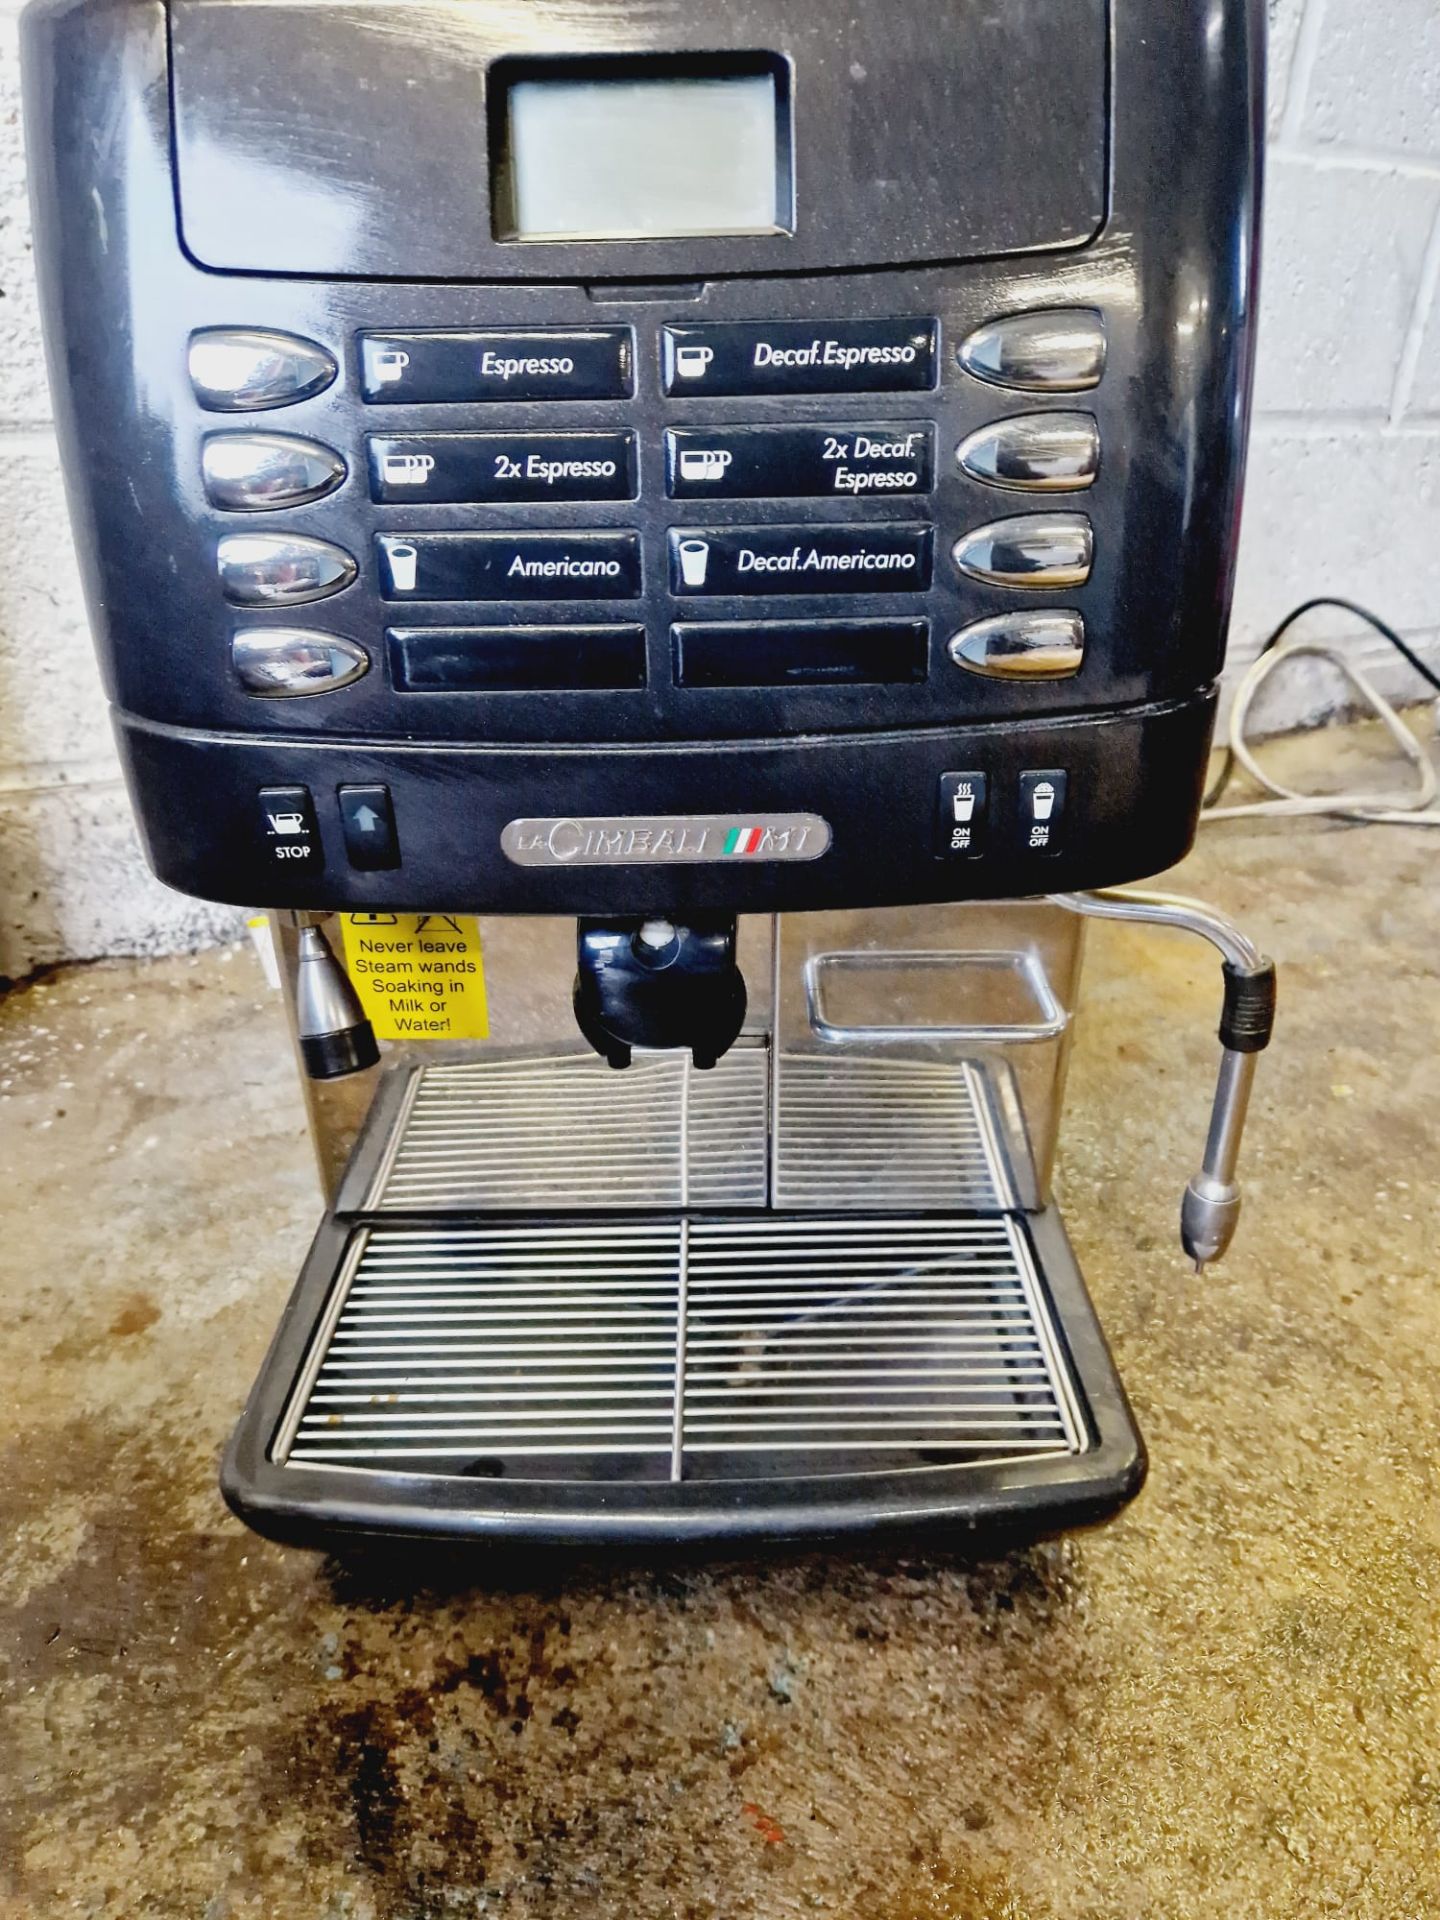 LACIMBALI M1 AUTOMATIC COFFEE MACHINE - UNTESTED - Image 4 of 5